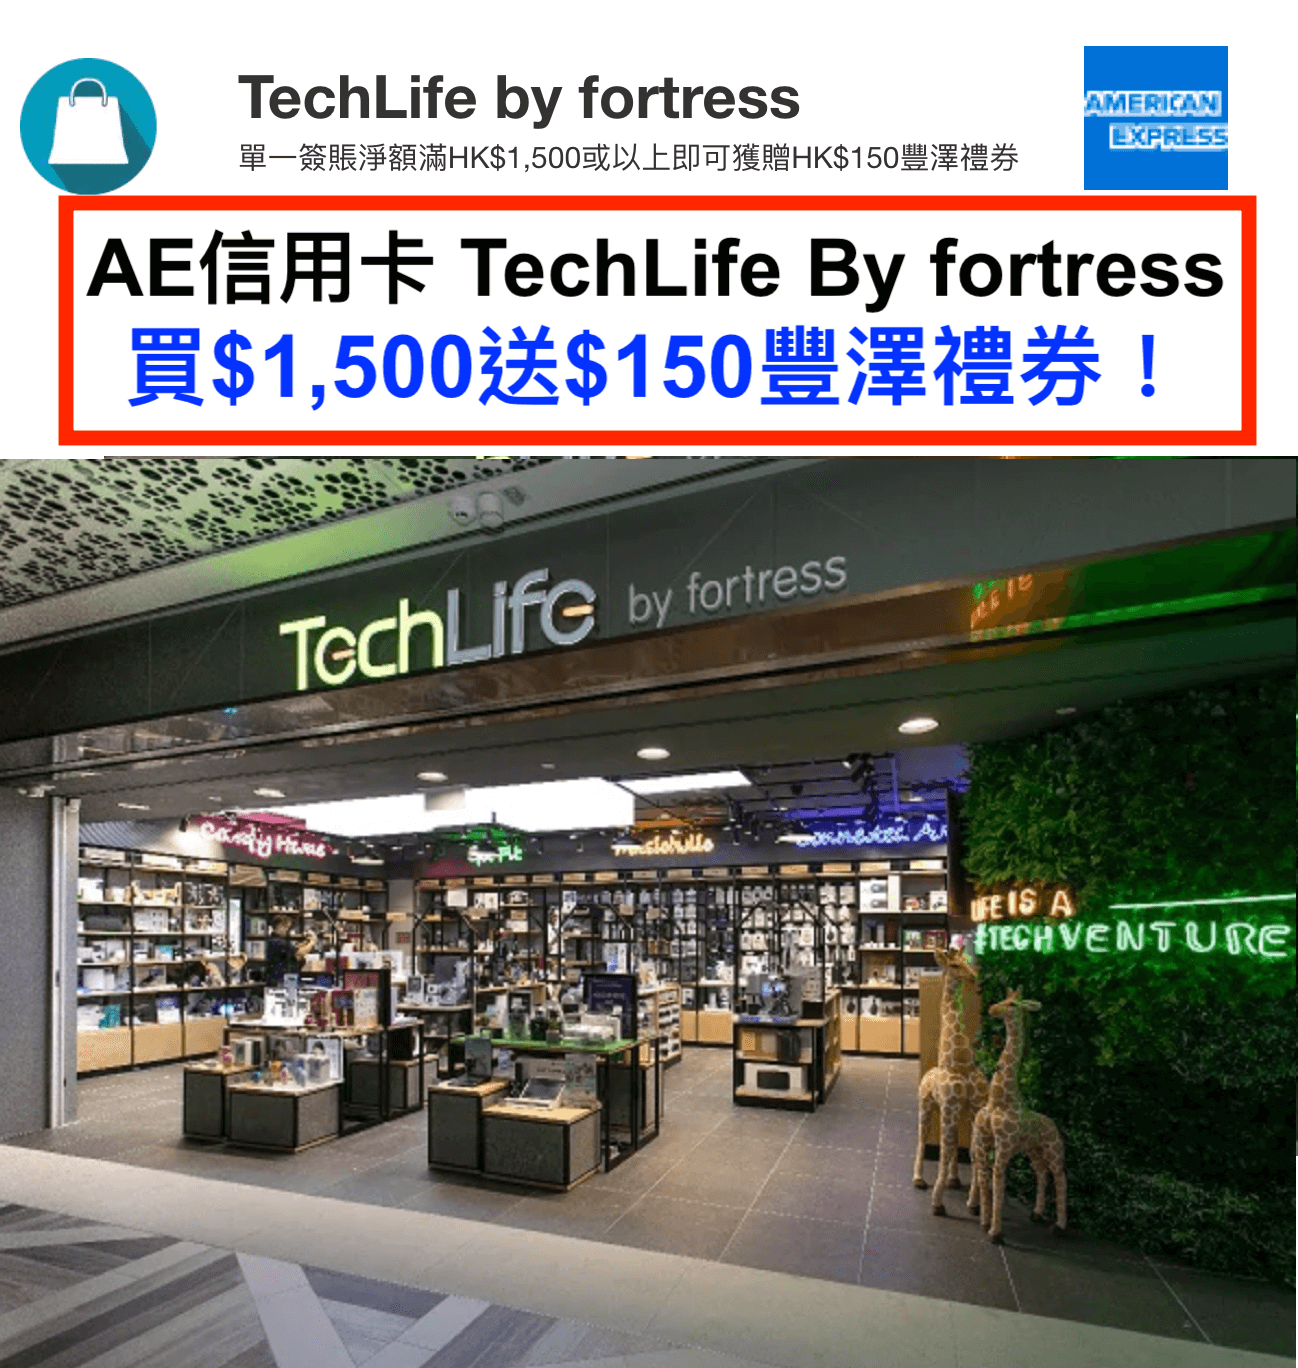 AE信用卡TechLife優惠！於TechLife單一簽賬滿$1,500可獲$150豐澤禮券！